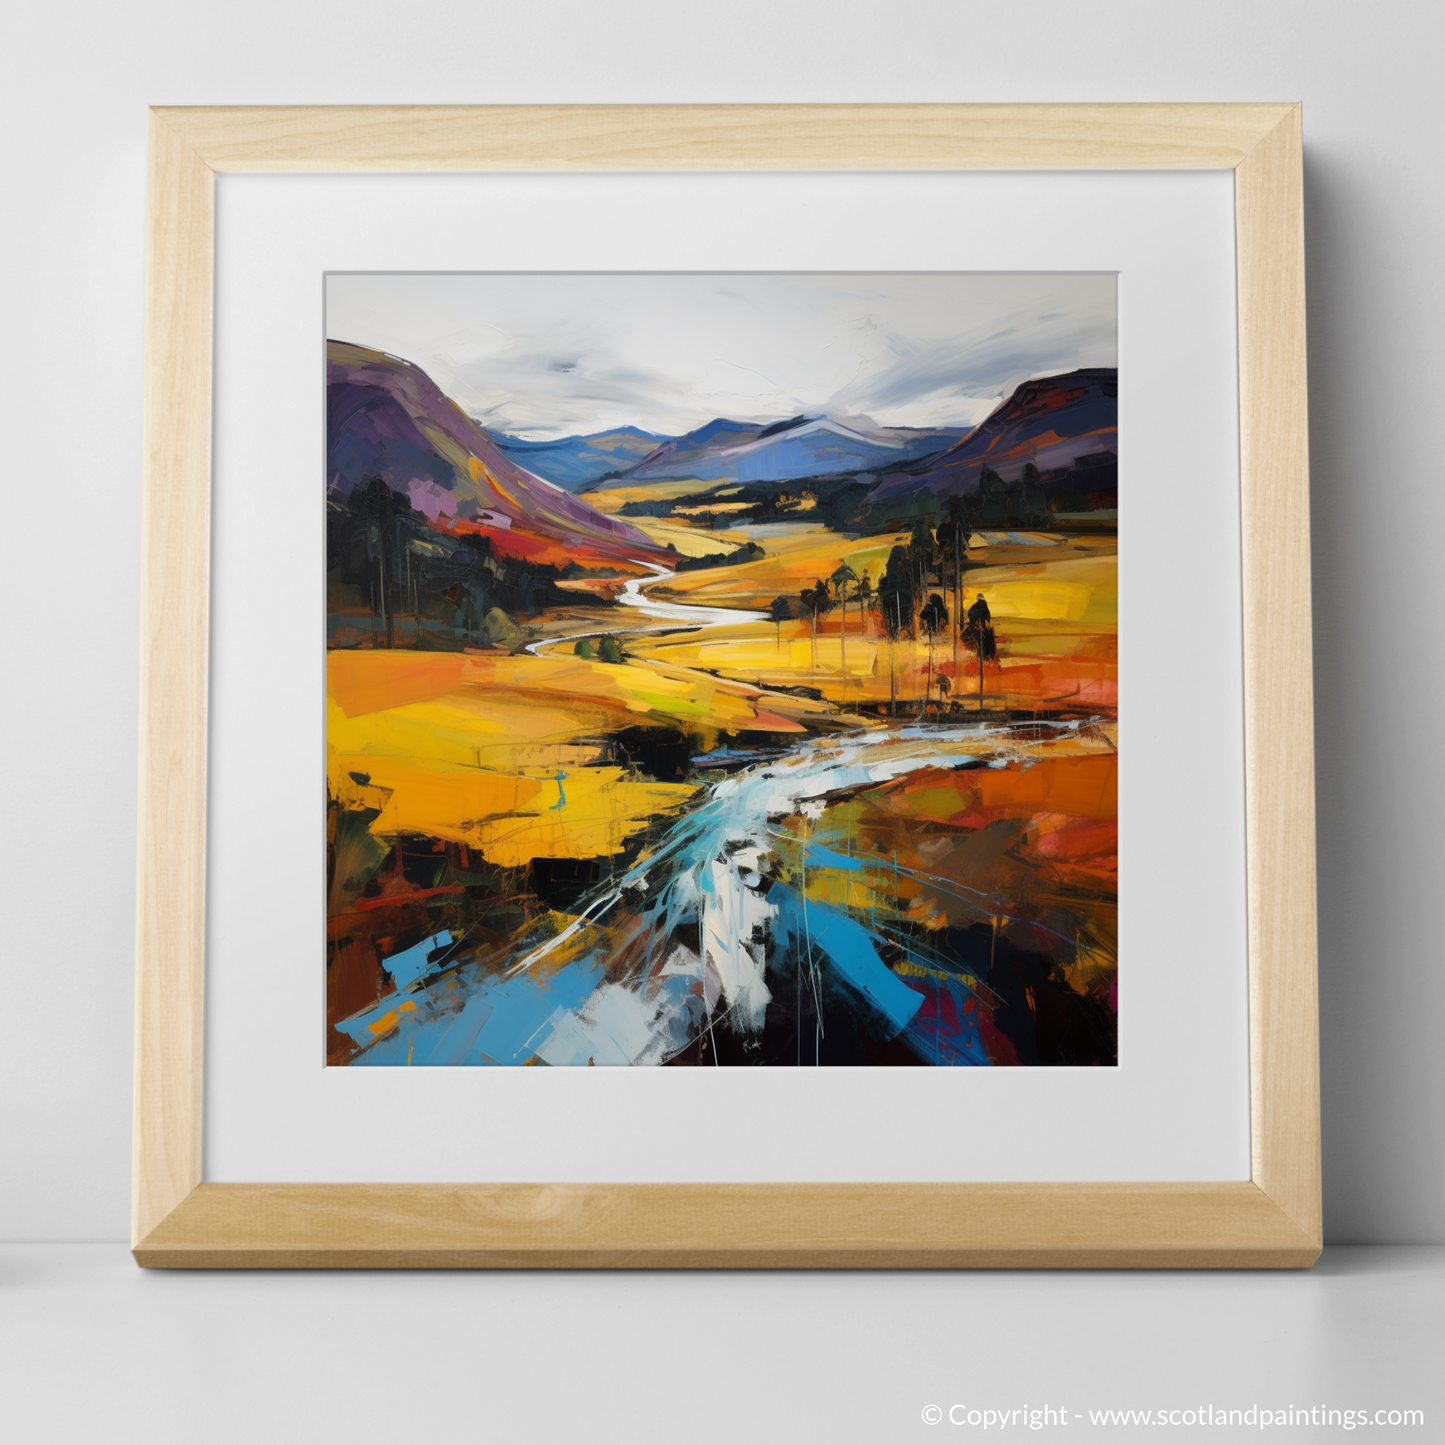 Art Print of Glen Feshie, Highlands with a natural frame